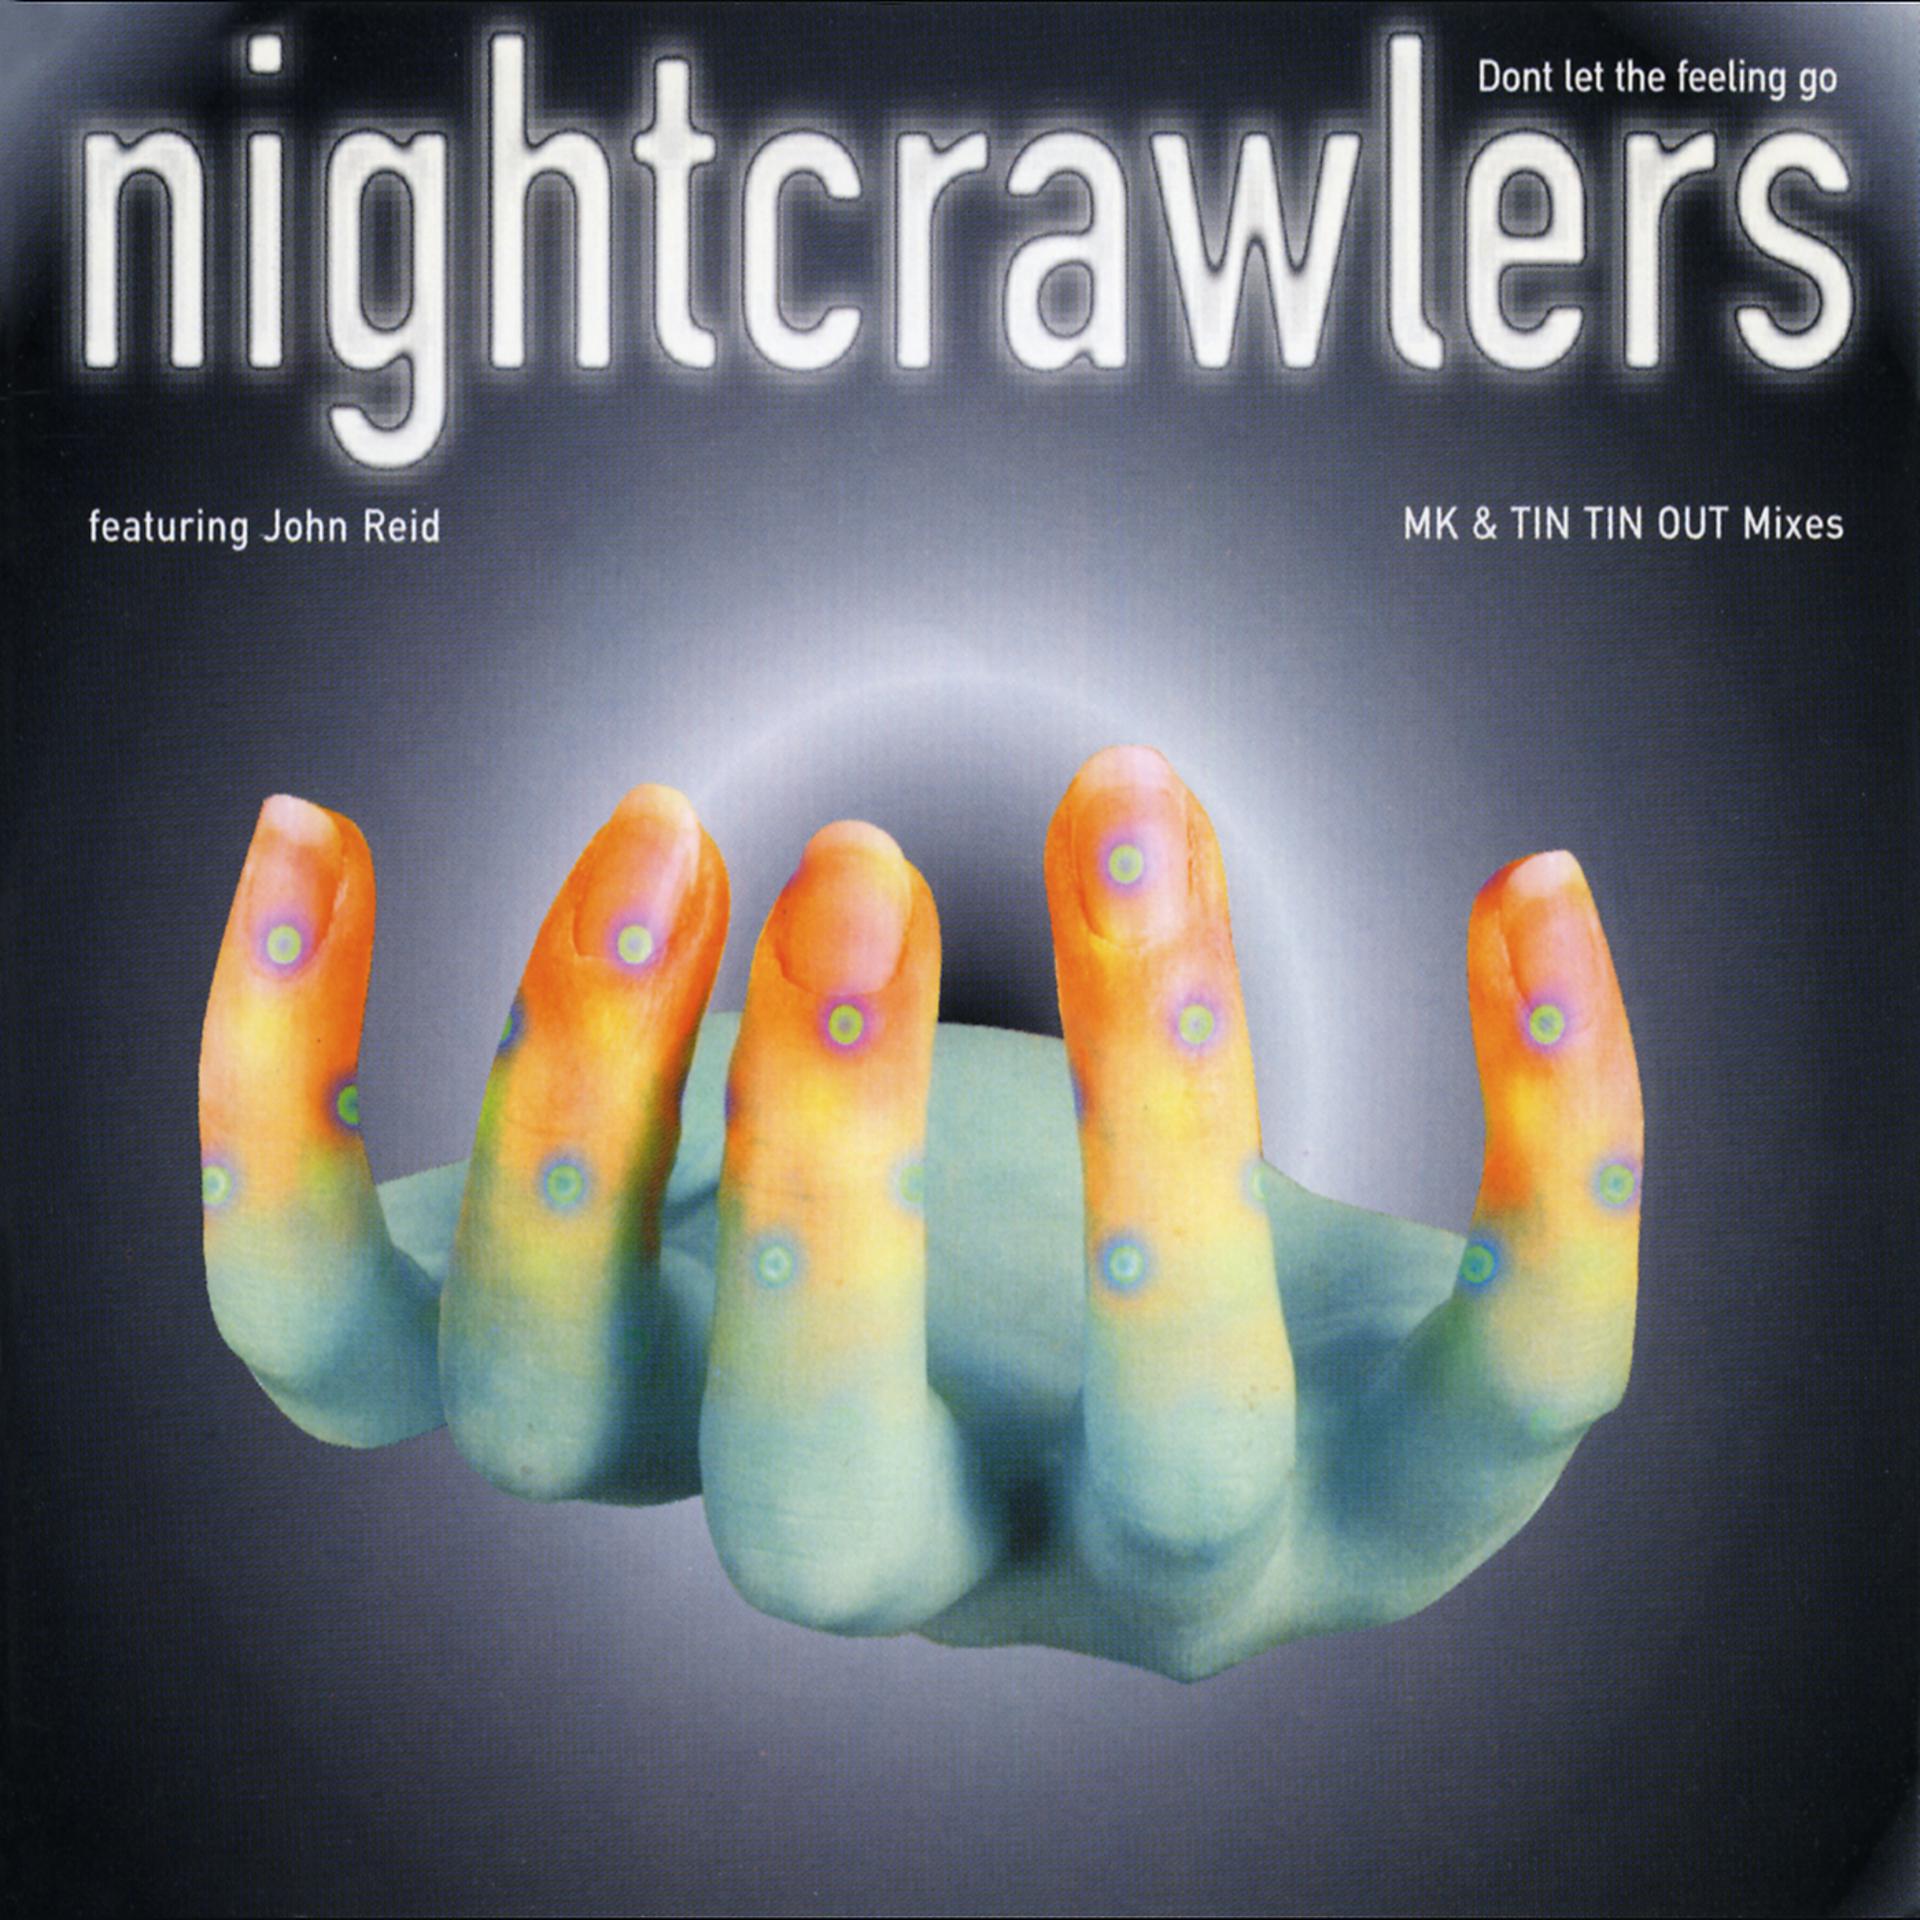 John Reid Nightcrawlers. Nightcrawlers группа. Don't Let the feeling go Nightcrawlers. John Reid (Music Manager). Feeling go песня